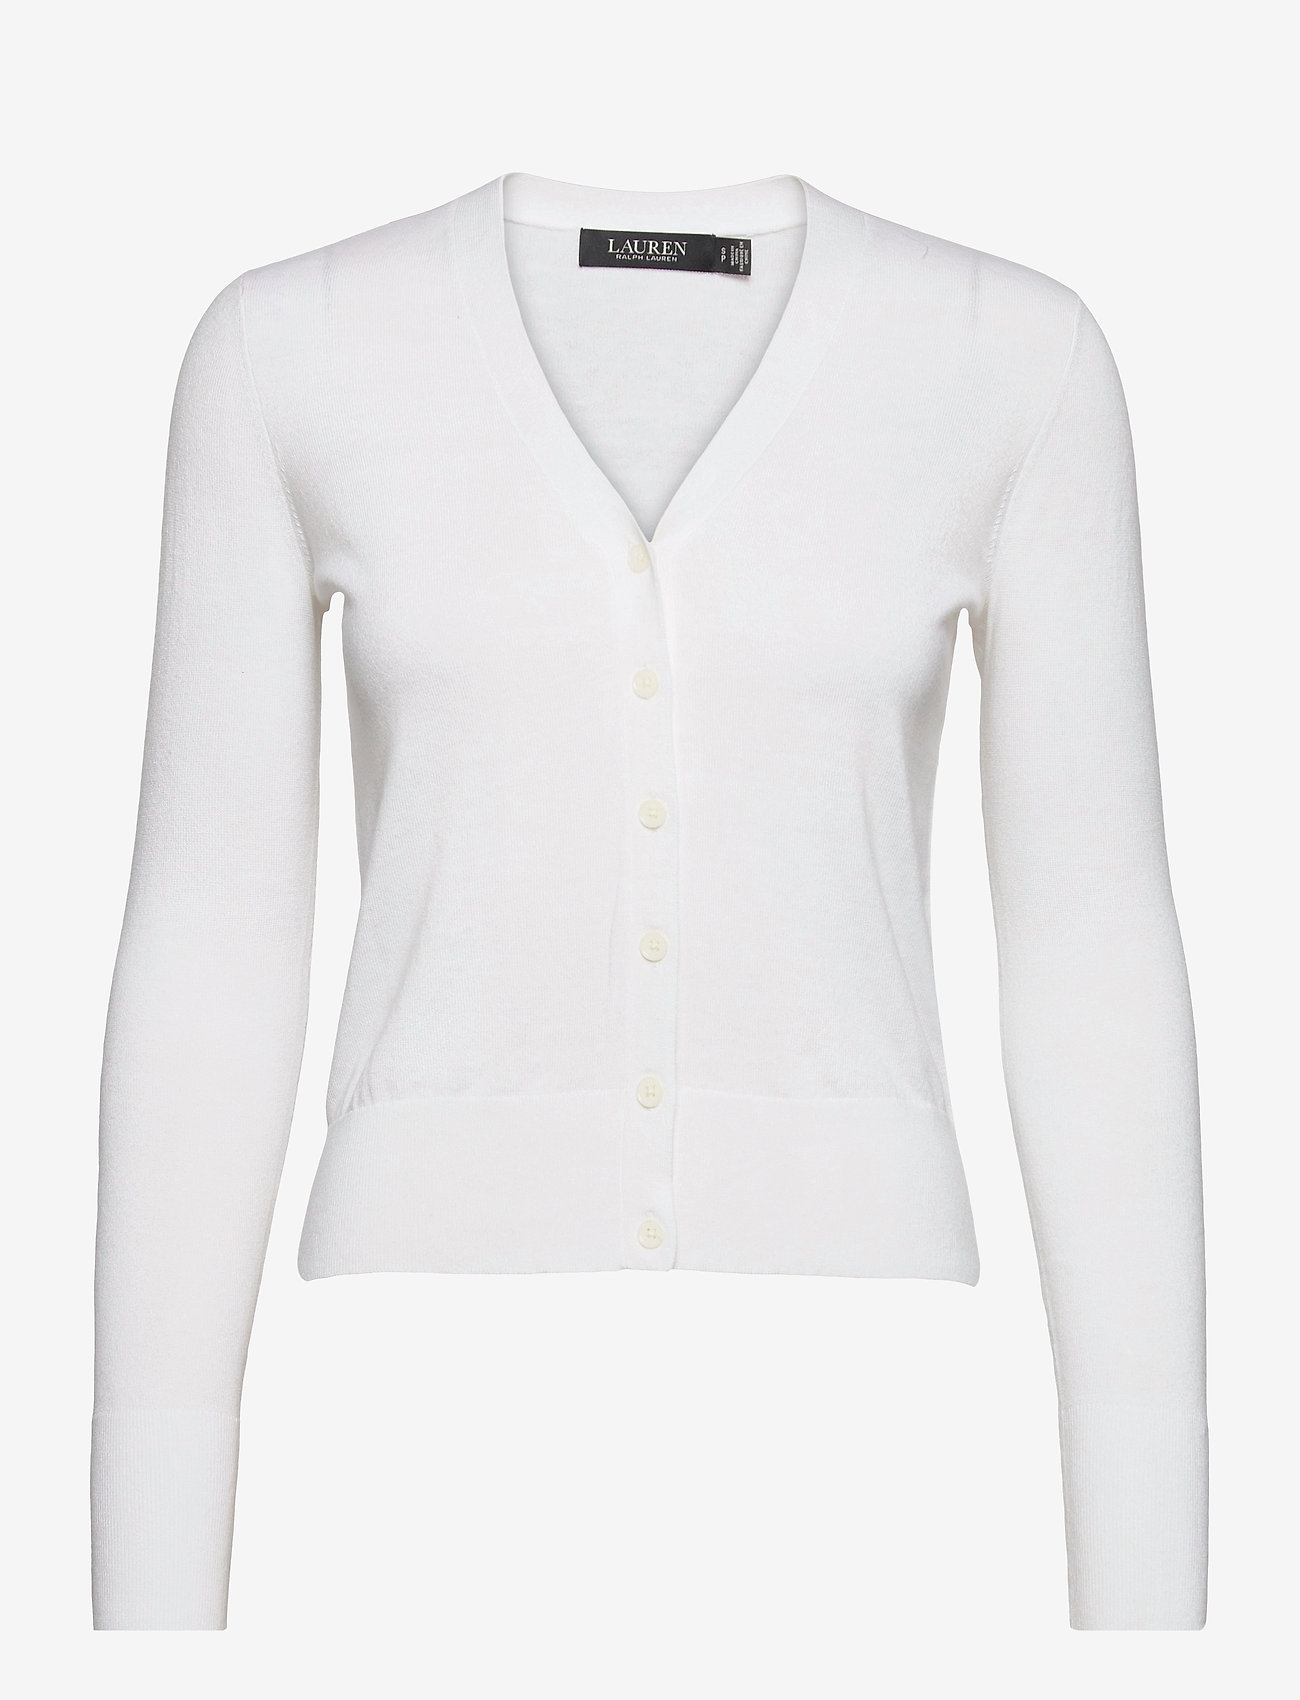 Lauren Ralph Lauren - Cotton-Modal Cardigan Sweater - cardigans - white - 1